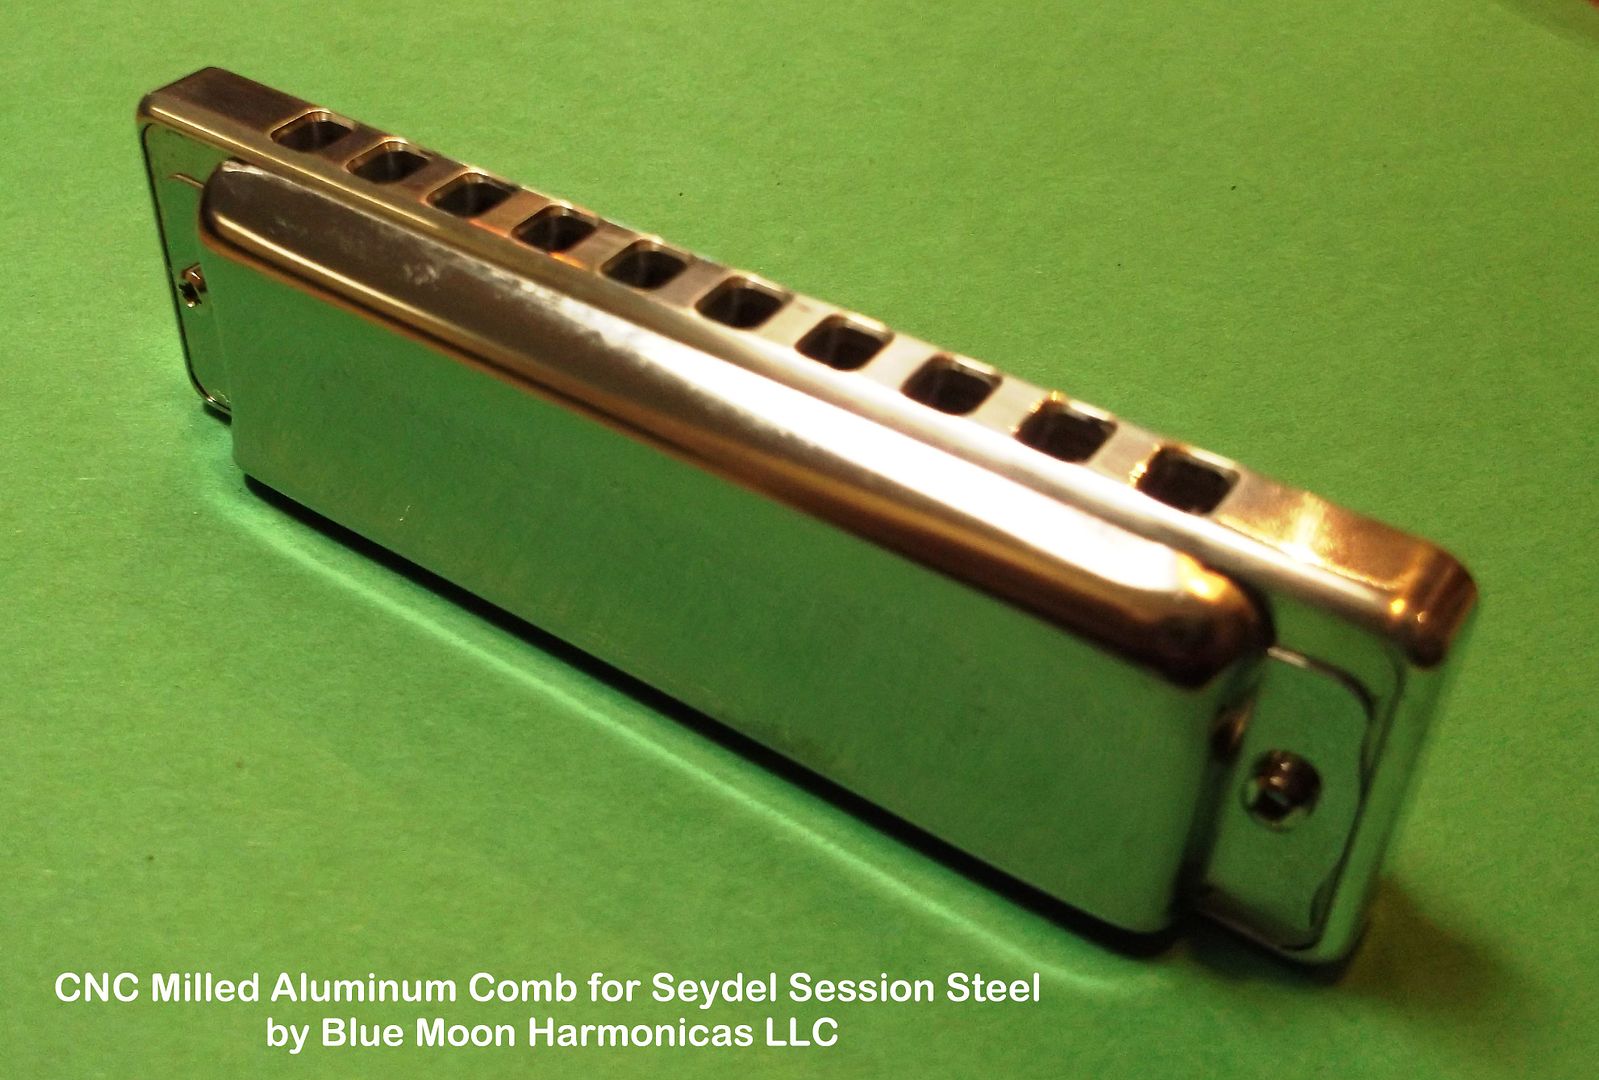 Milled Aluminum Comb for Seydel Session Steel photo 11a_zps9e3e8ed8.jpg